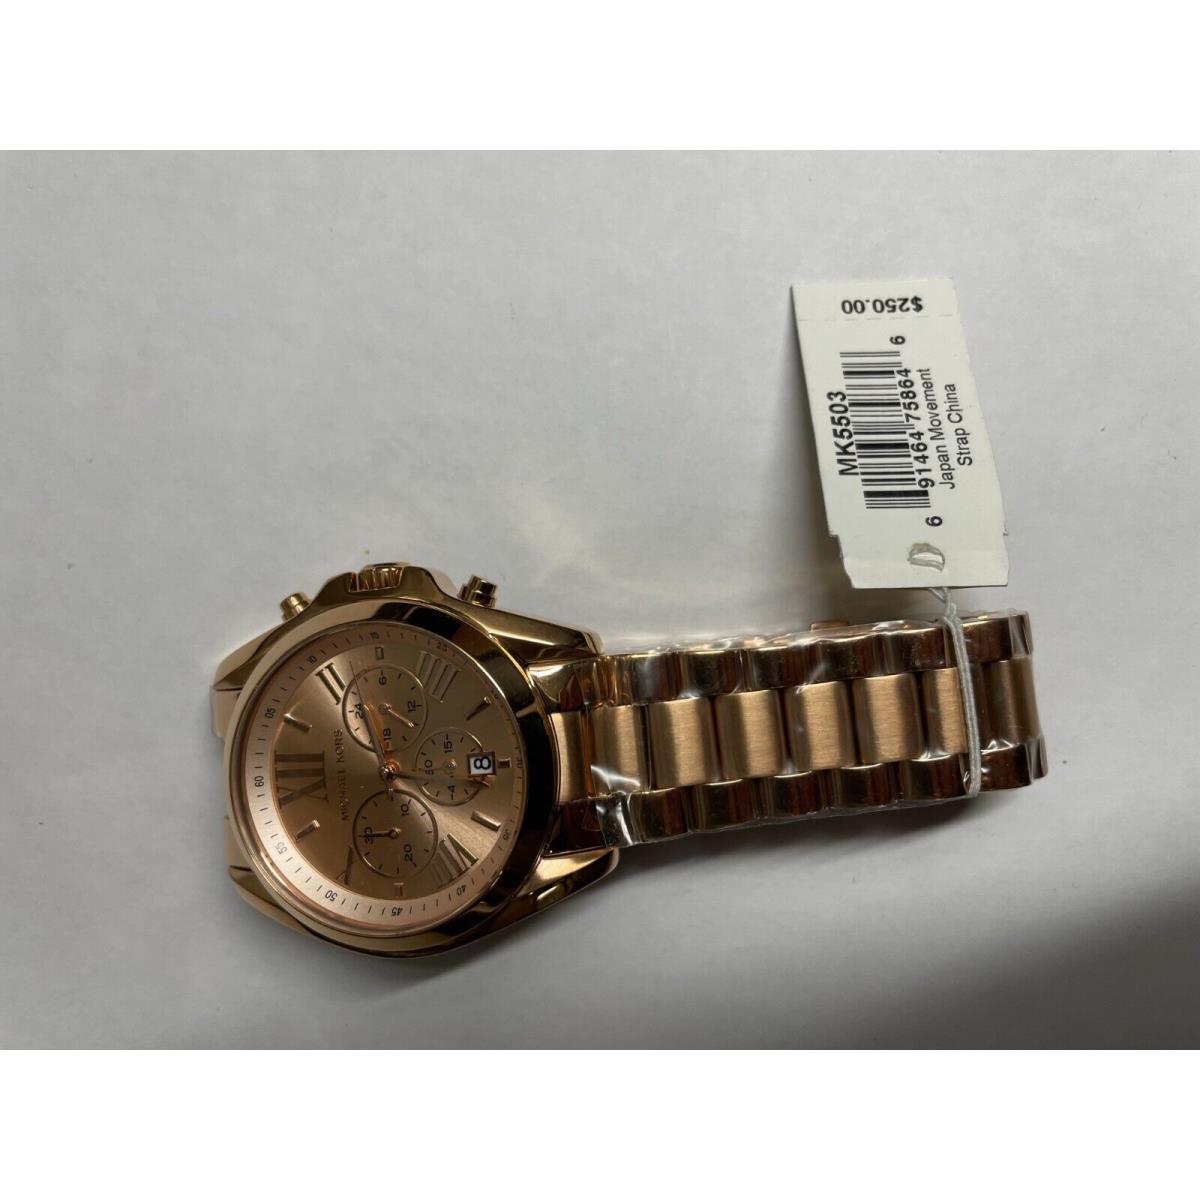 Michael Kors MK5503 Bradshaw Rose Gold Tone Chronograph Bracelet Womens Watch - Gold